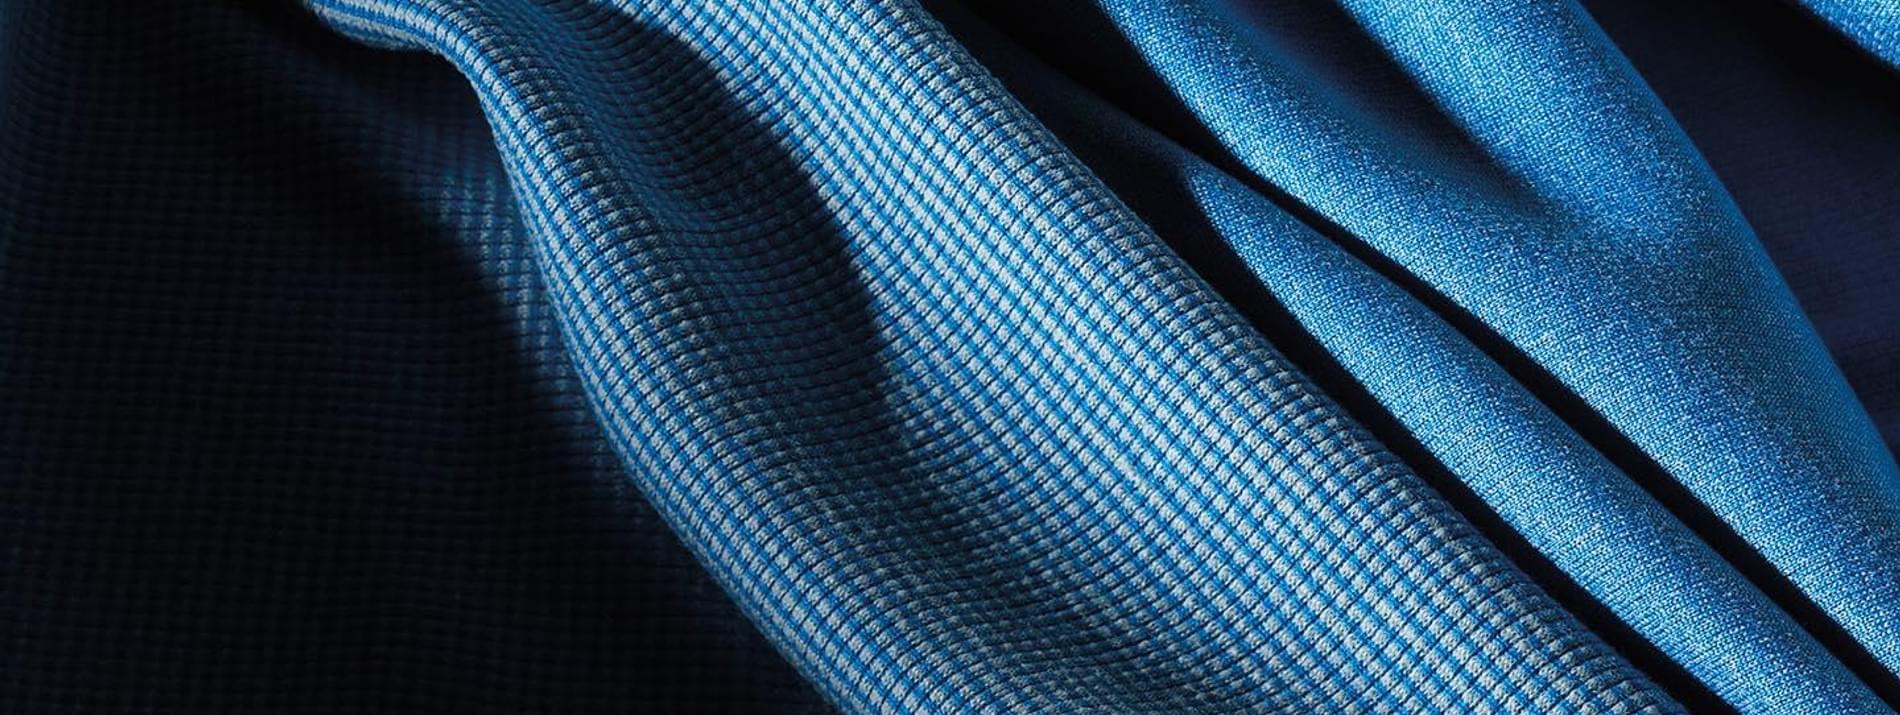 Polartec Power Wool Fabric